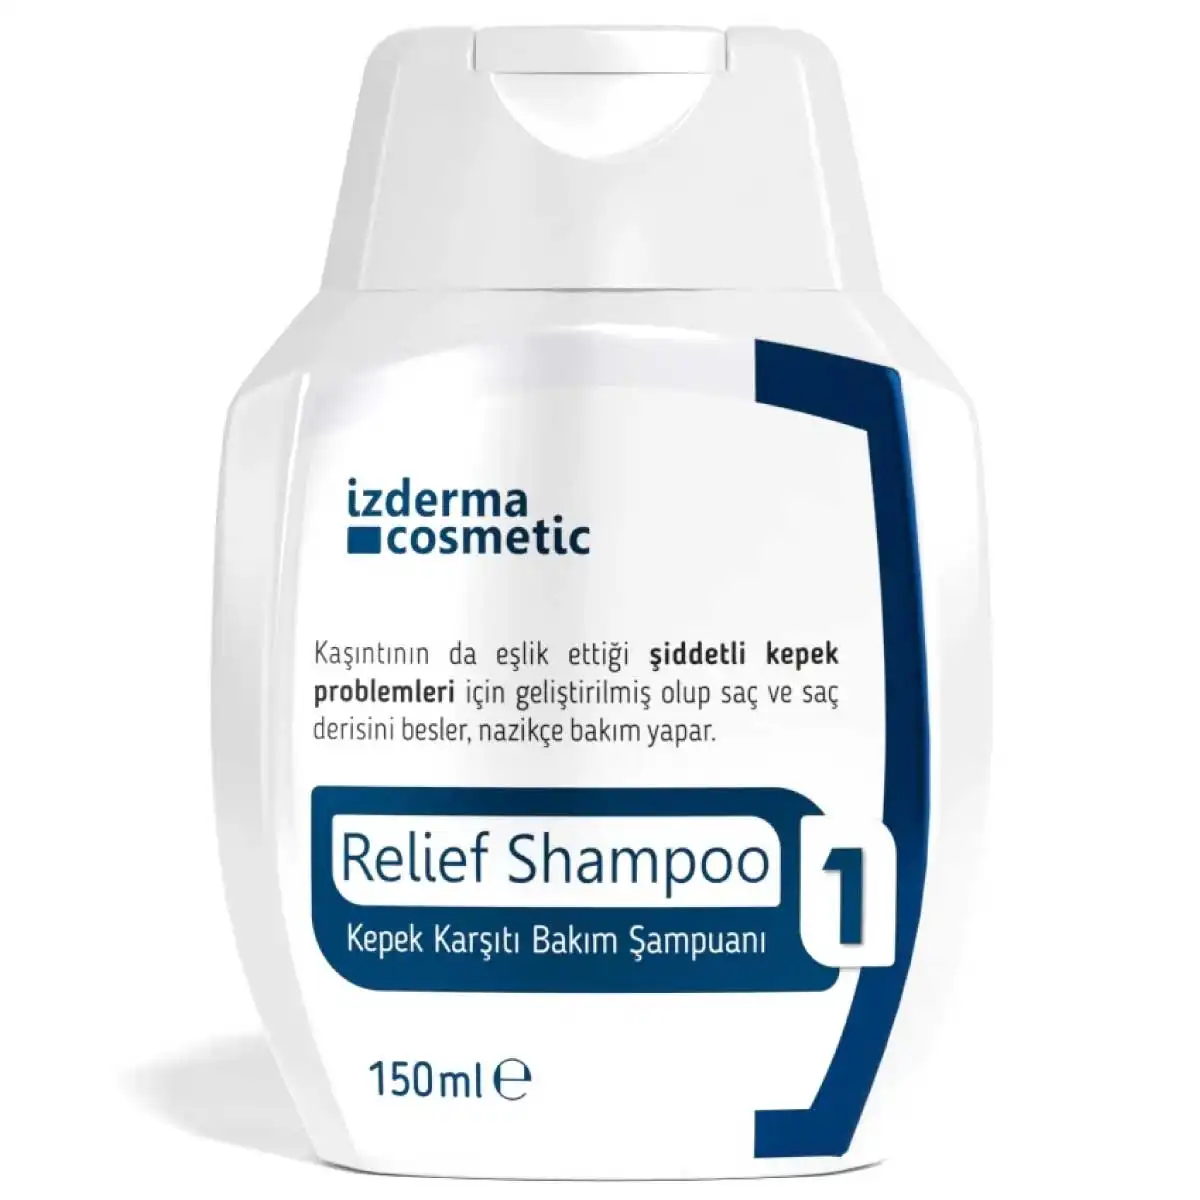 En İyi Şampuan İzderma Relief Shampoo Kepek Karşıtı